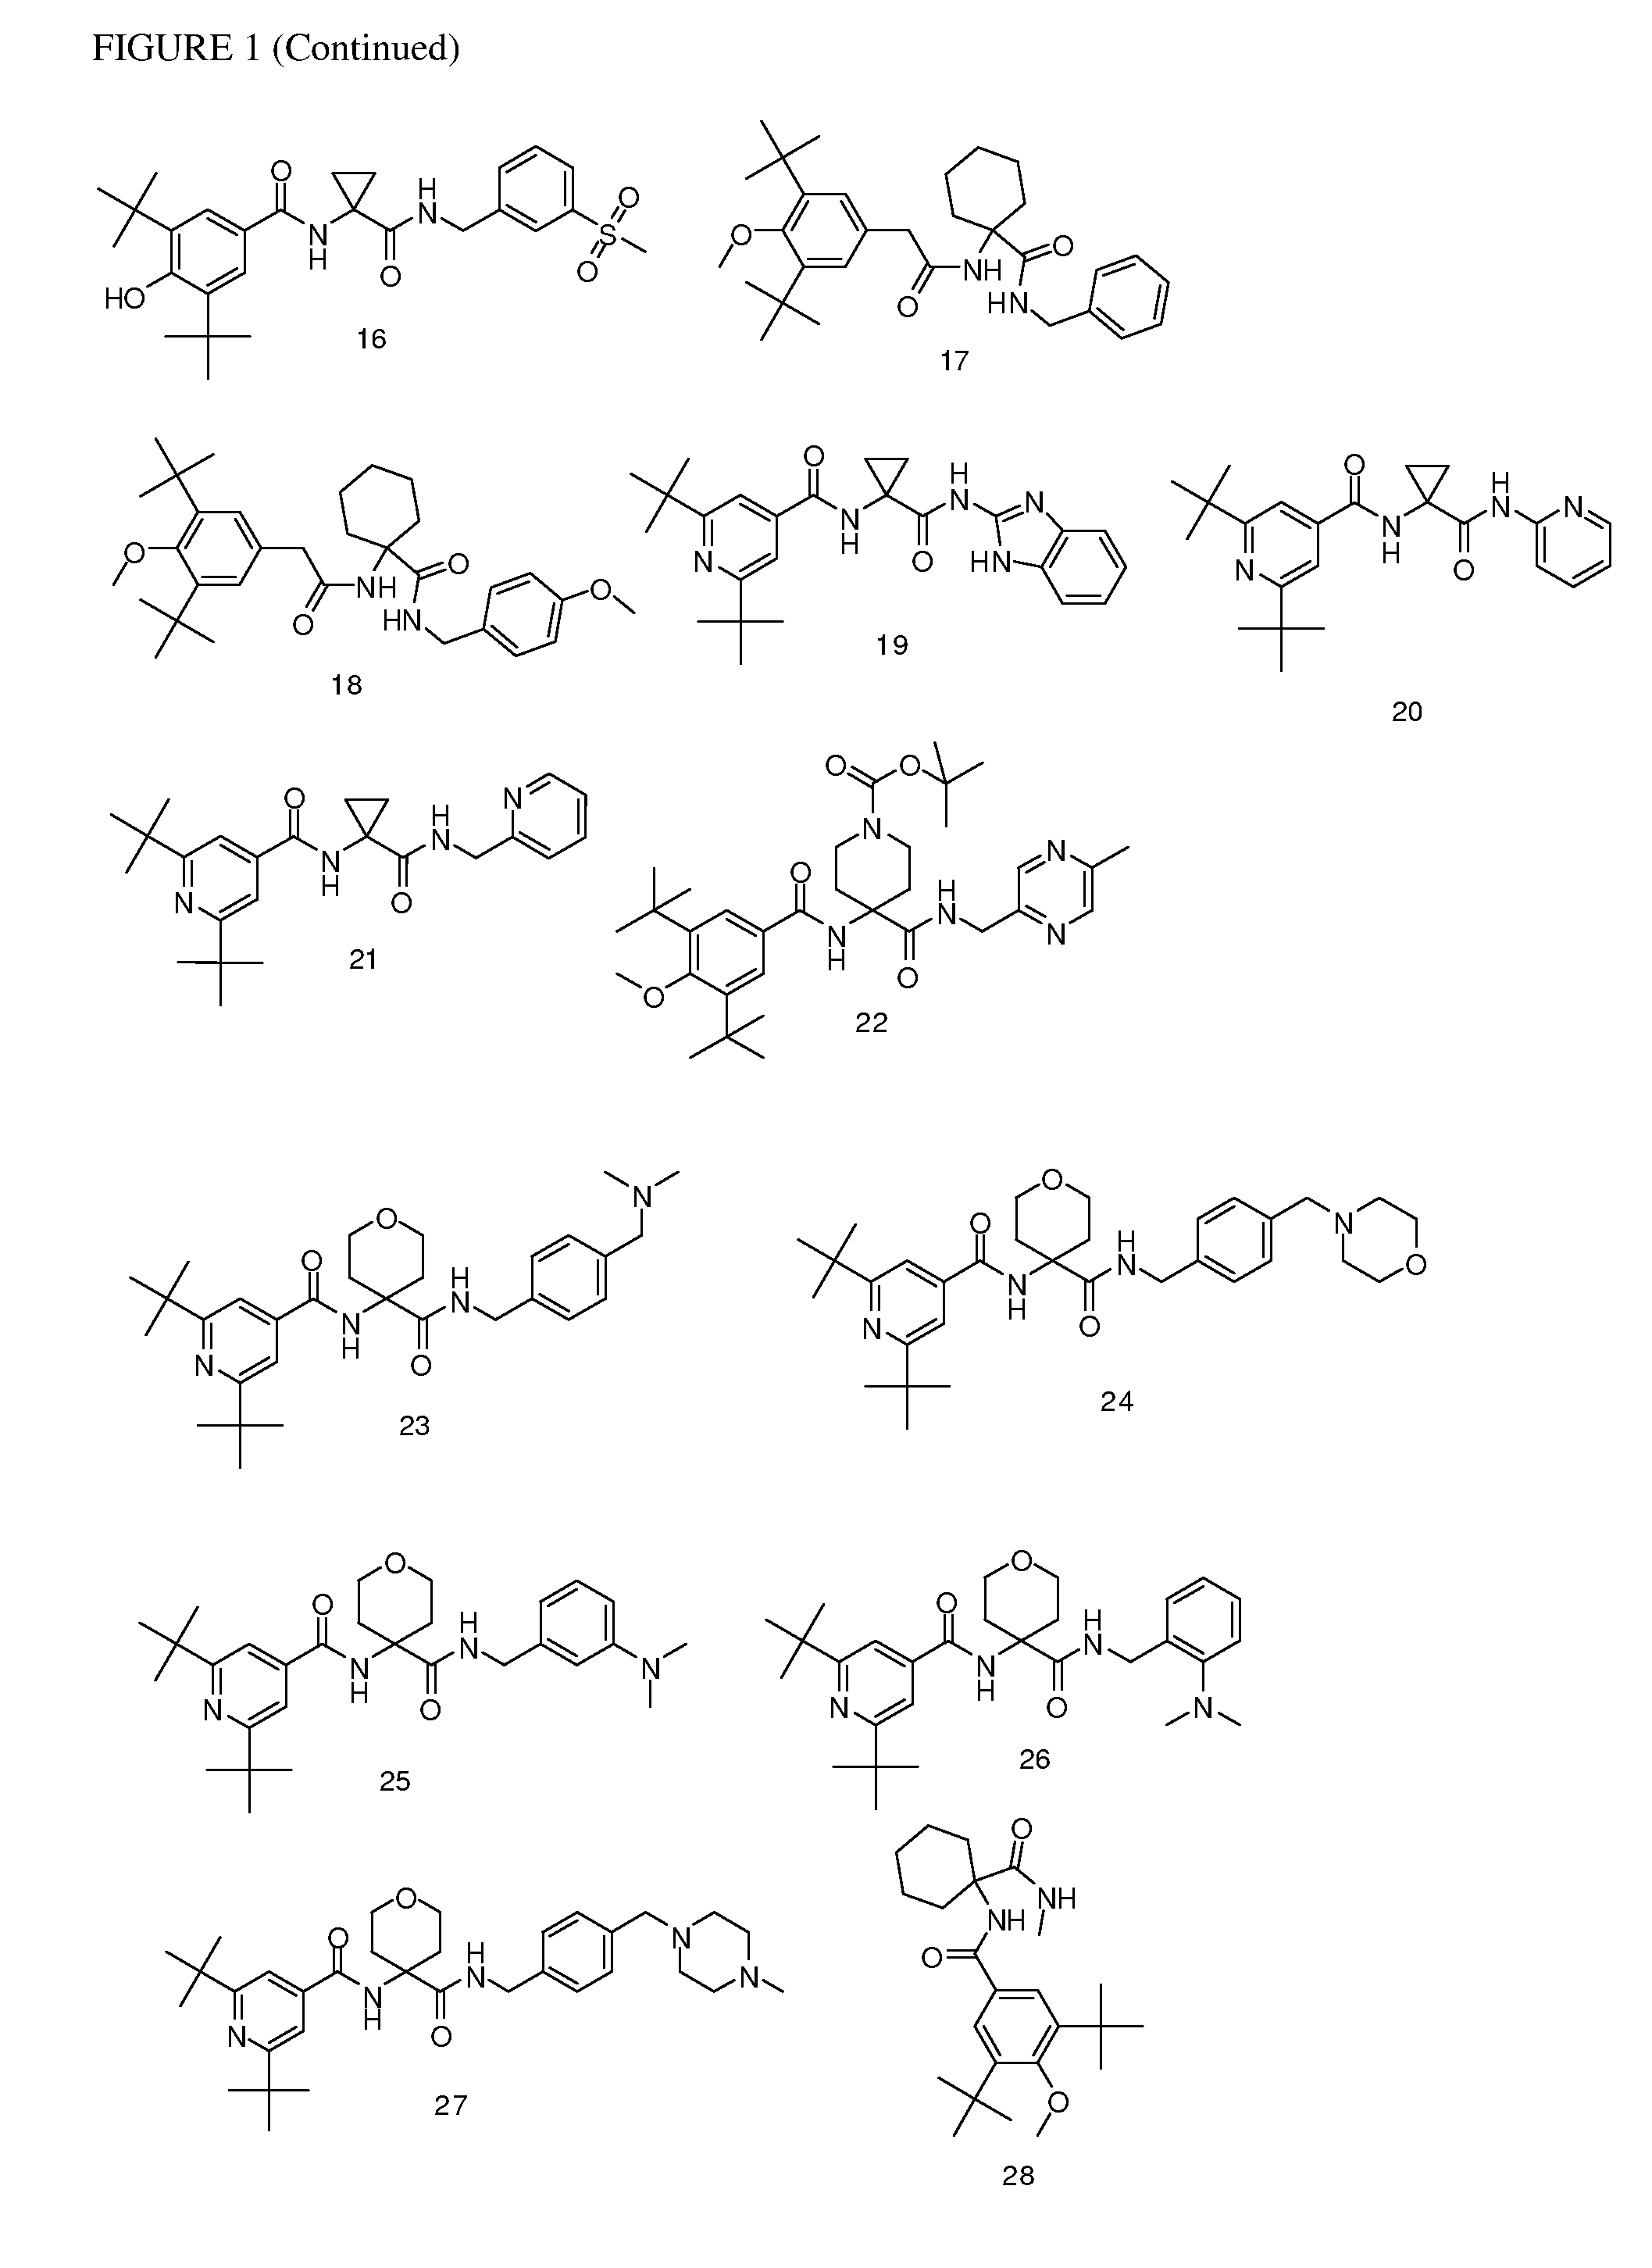 Cyclylamine derivatives as calcium channel blockers